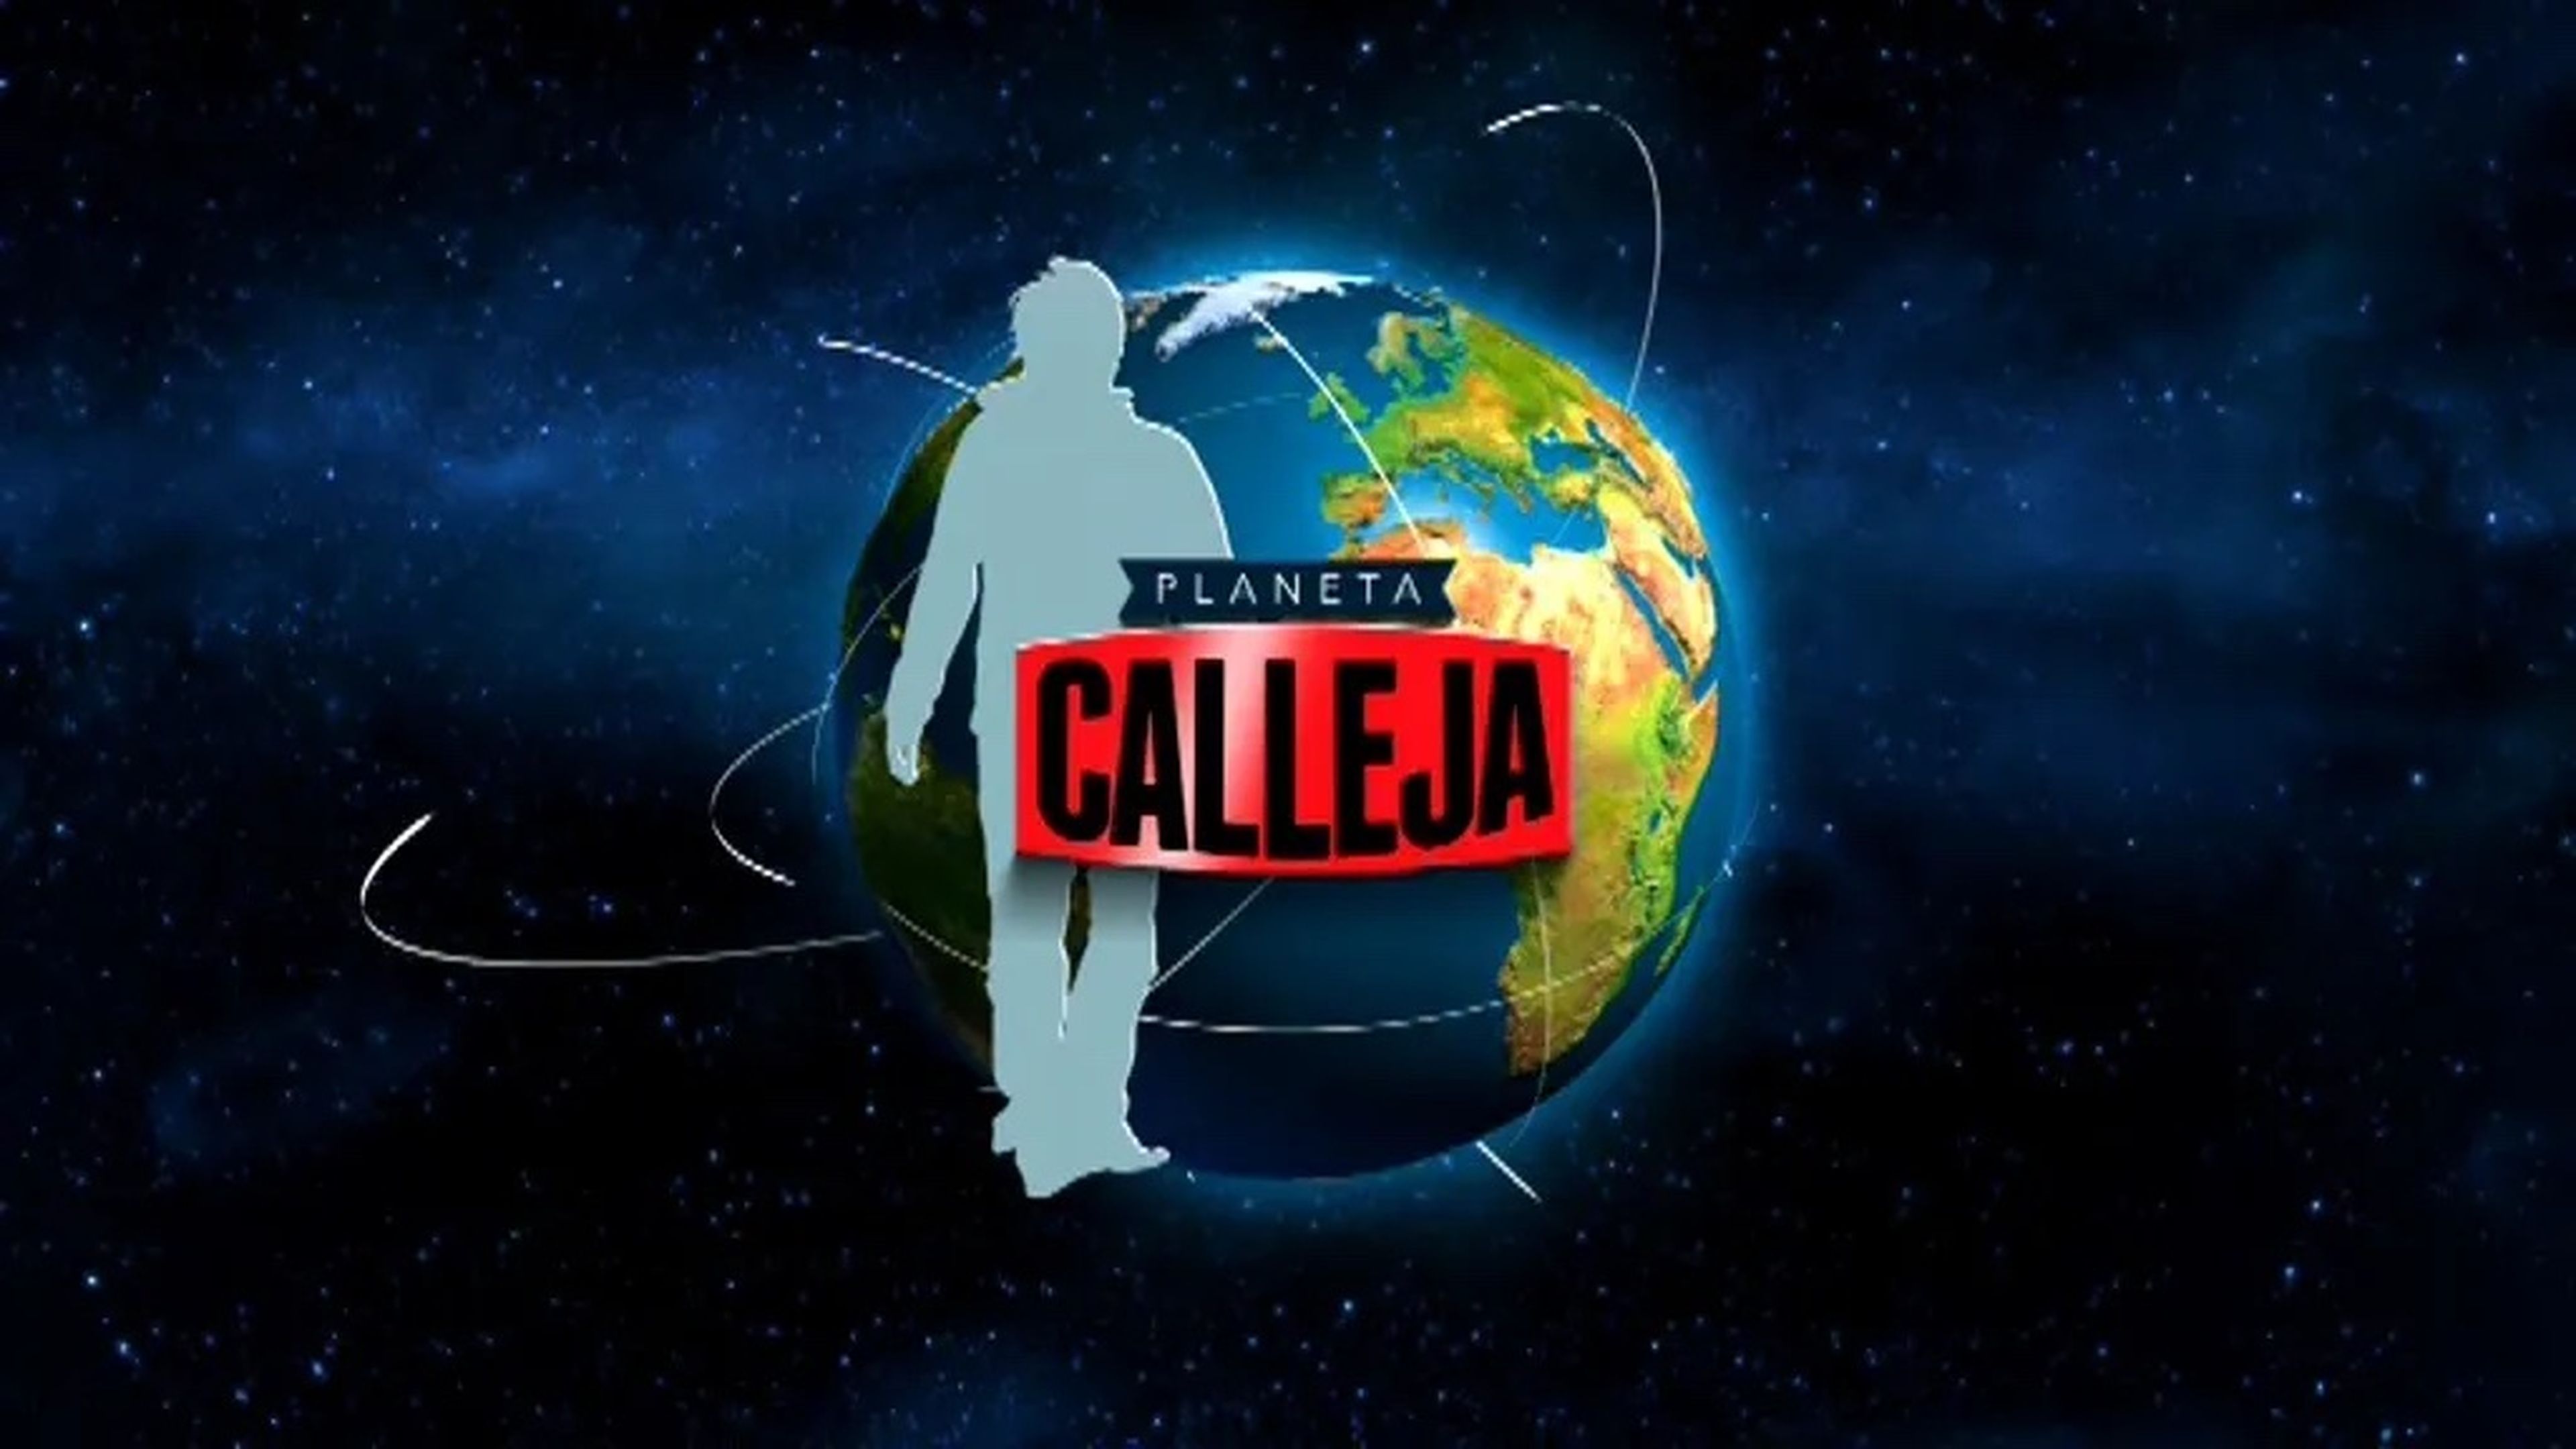 Programa de Jesús Calleja, 'Planeta Calleja'.